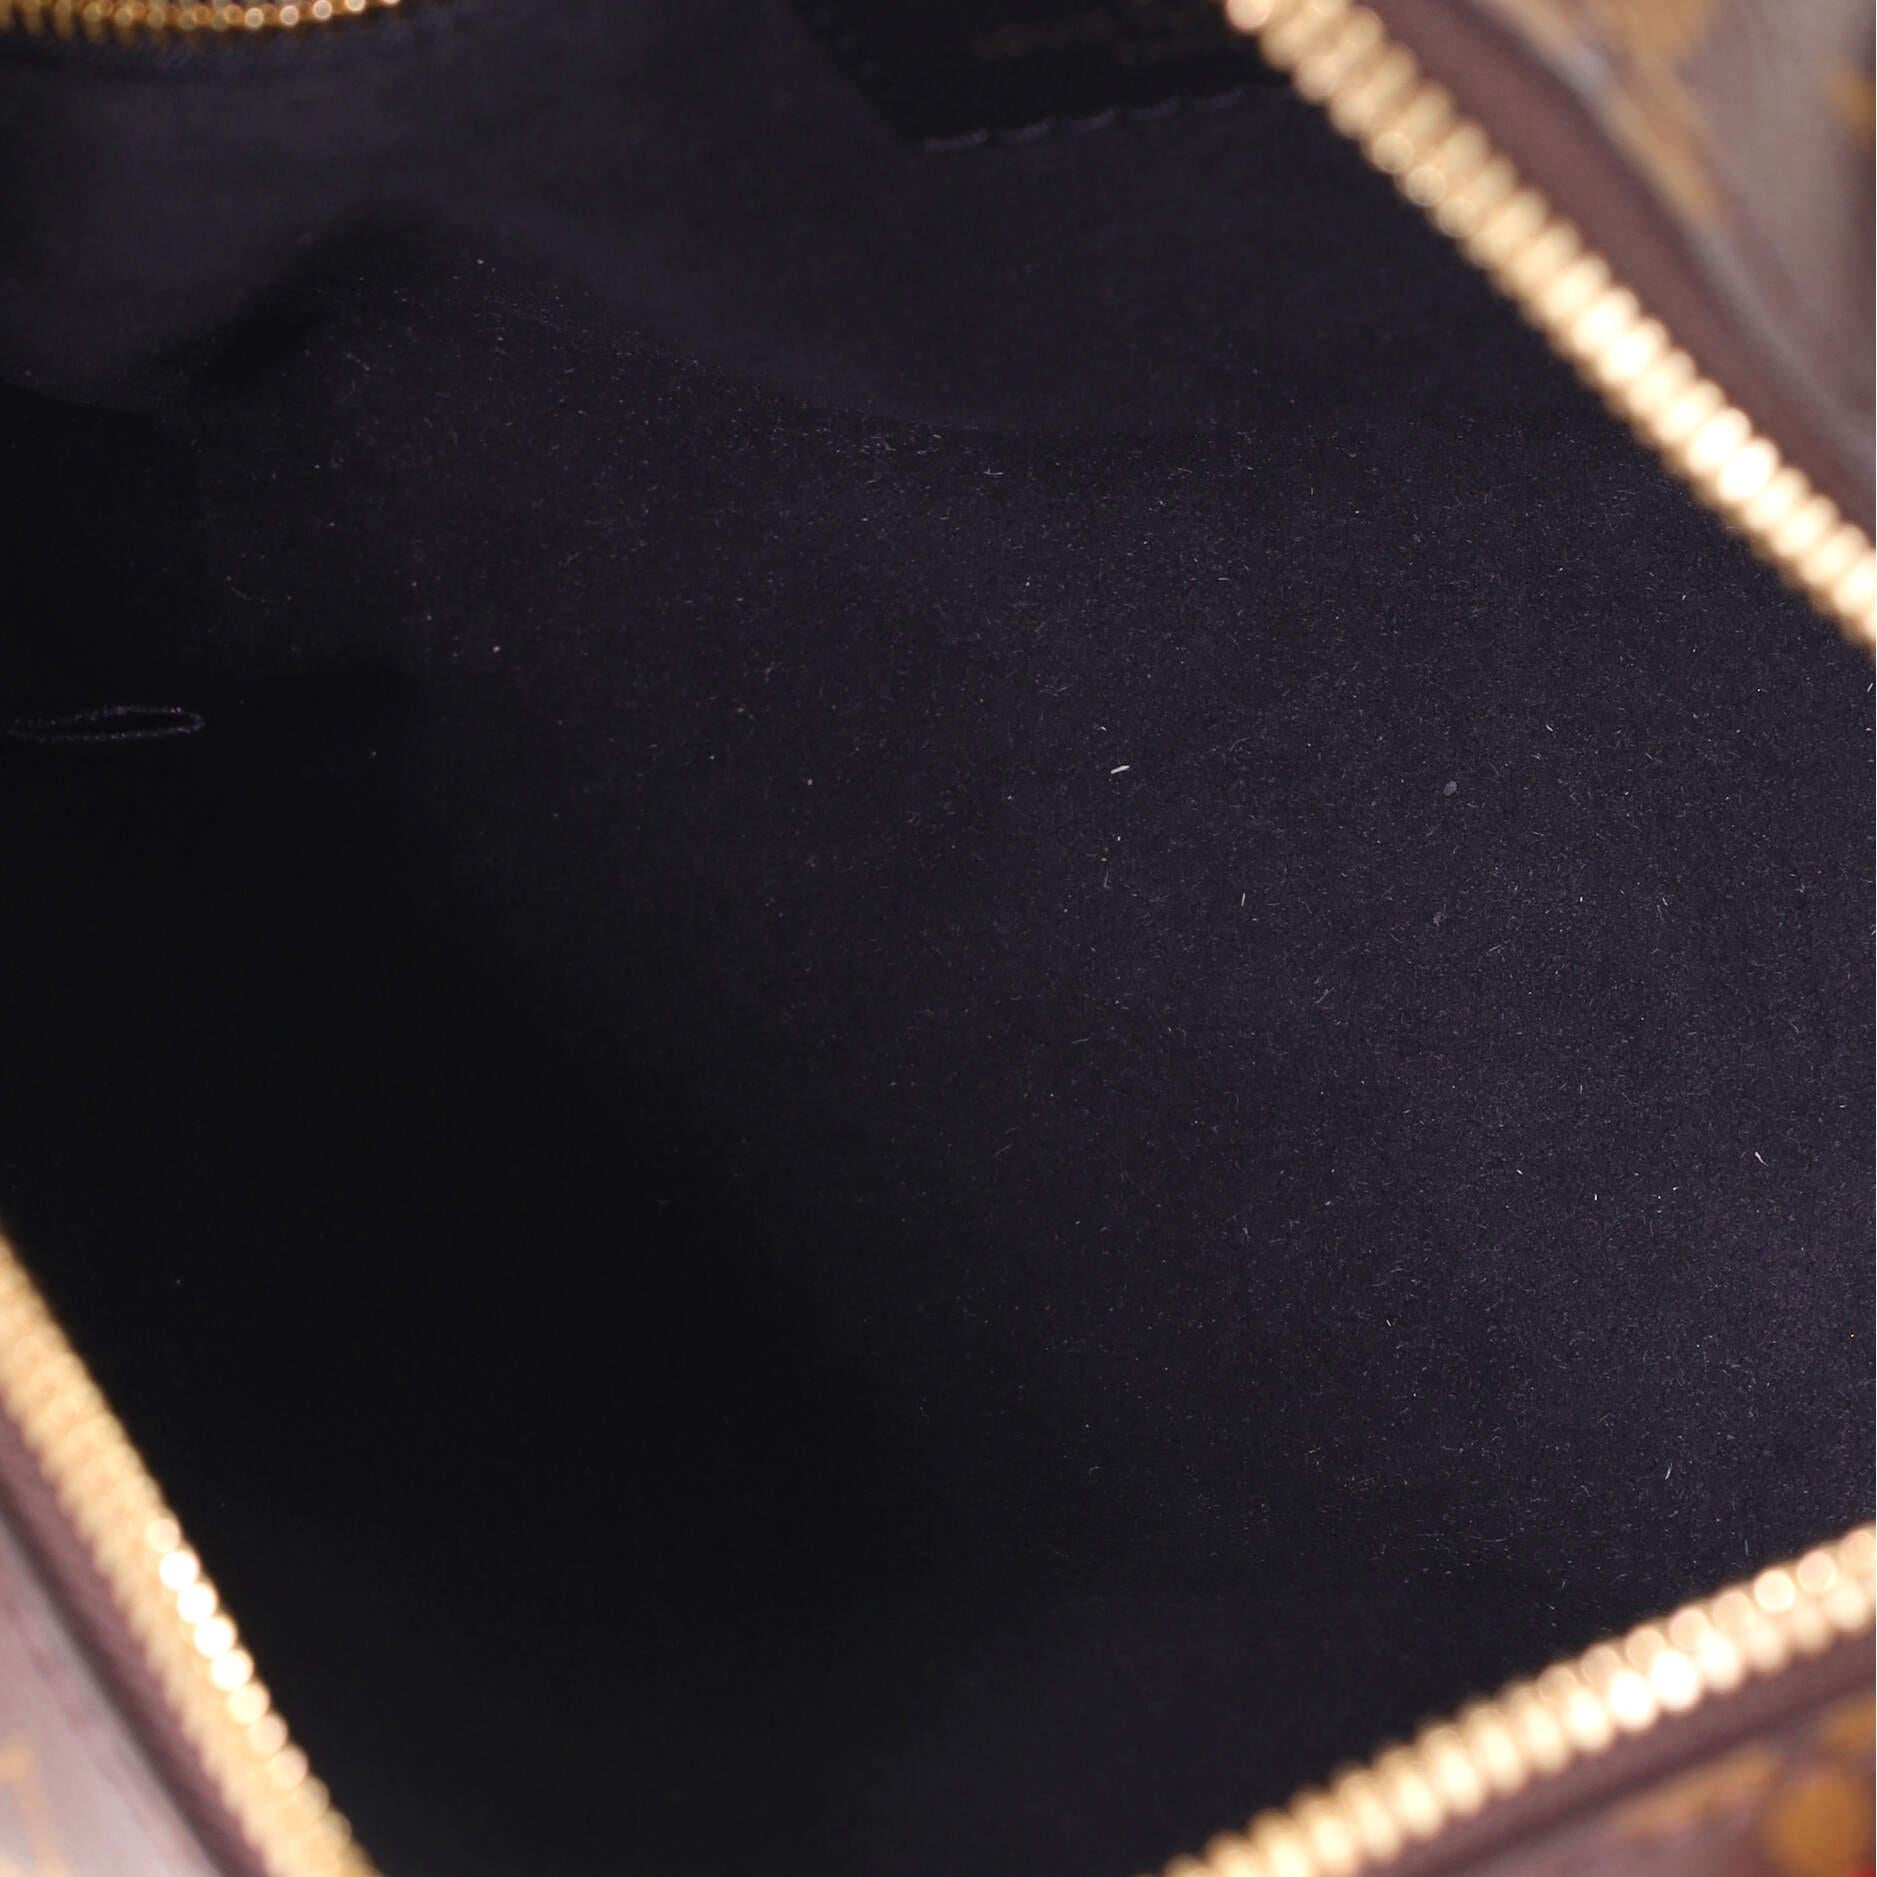 Louis Vuitton Petite Malle Souple Handbag Monogram Canvas In Good Condition In NY, NY